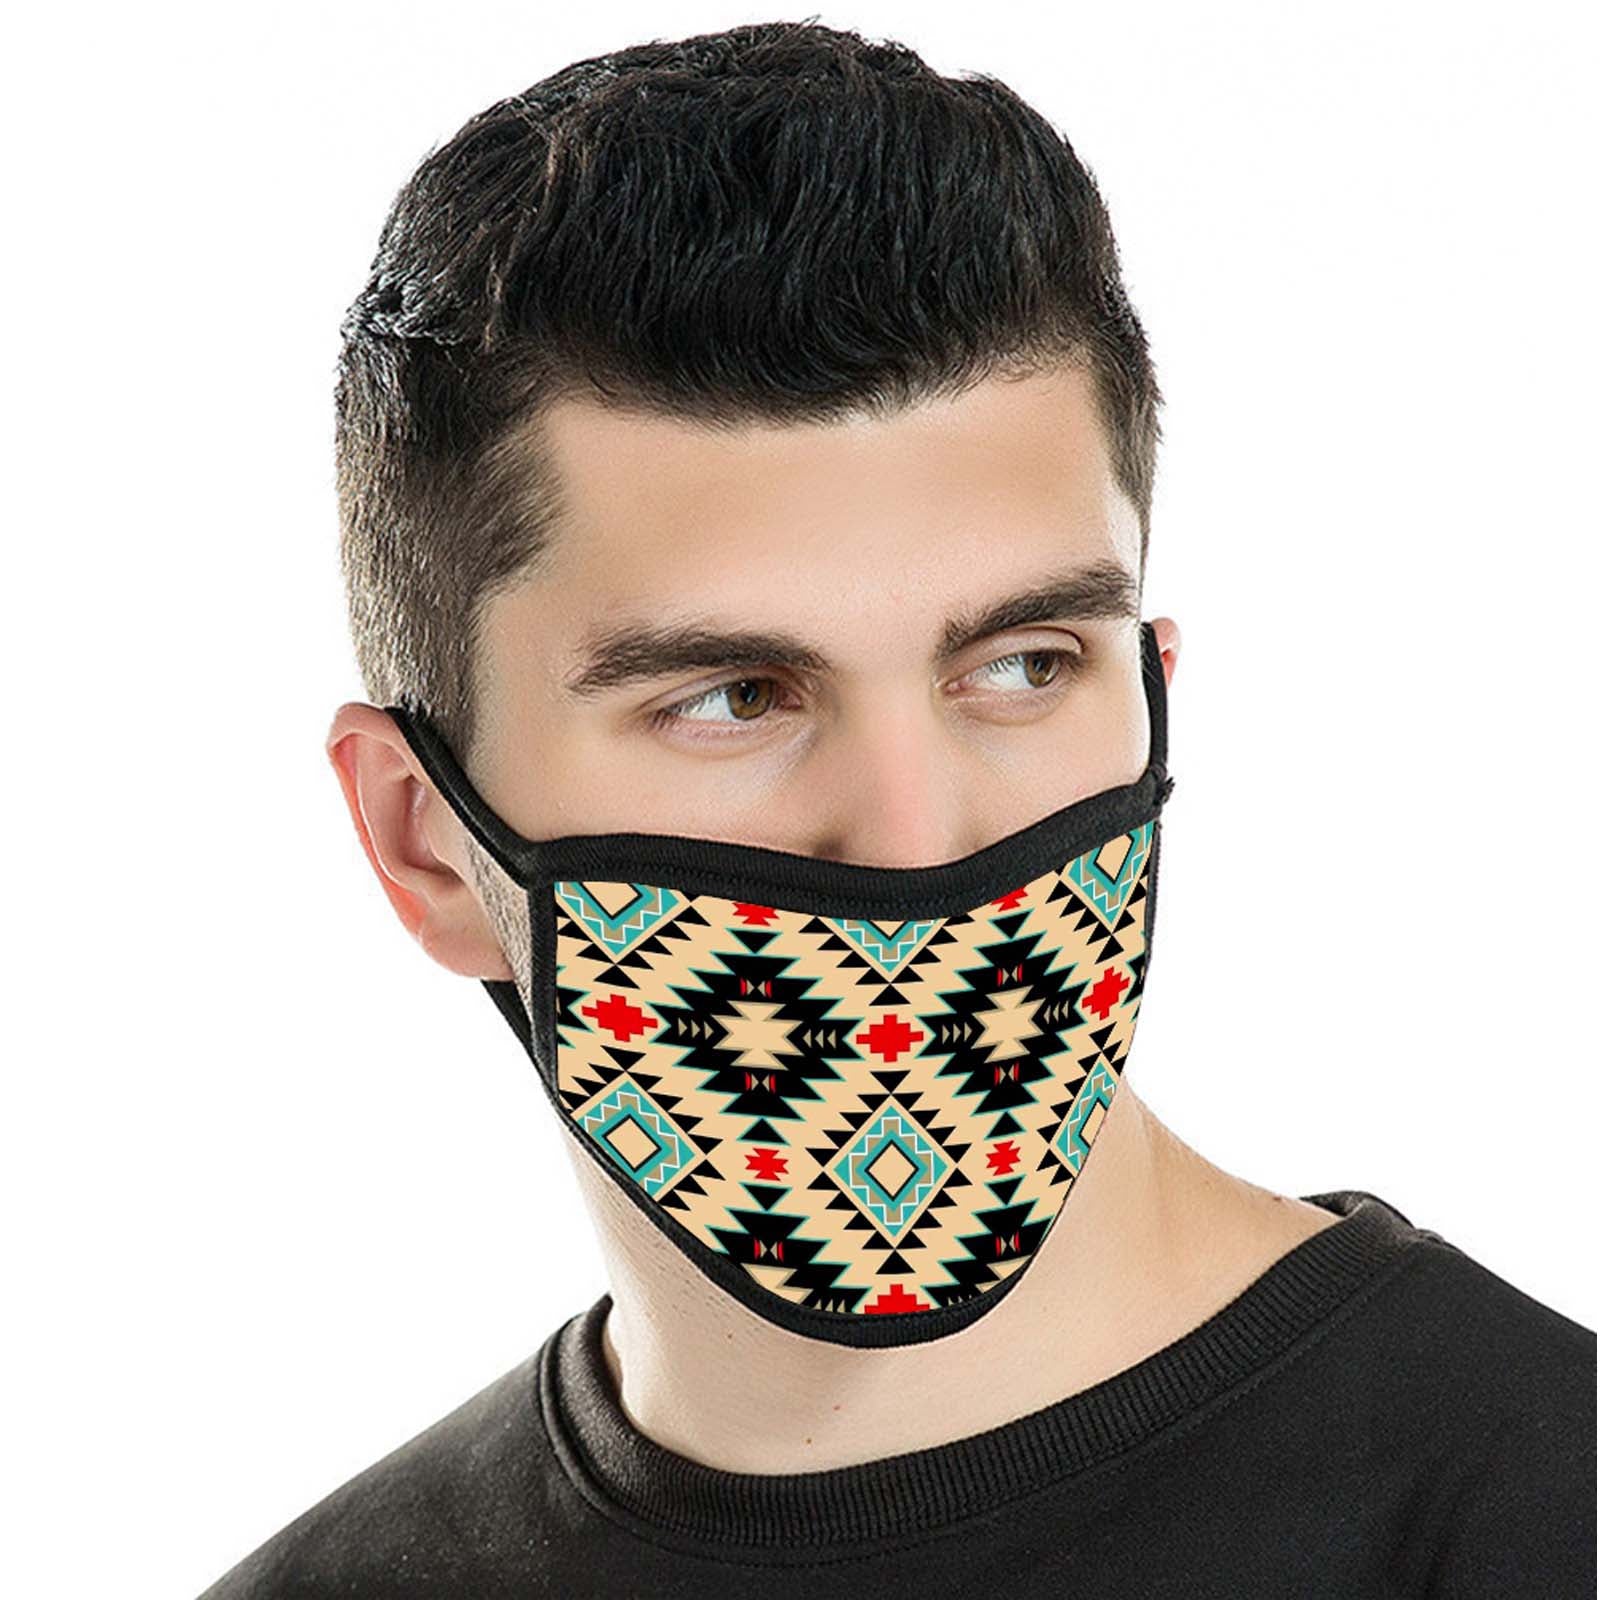 SFCM-009 American Bling Tan Aztec Print Fabric Face Mask Double Layer 1Pcs